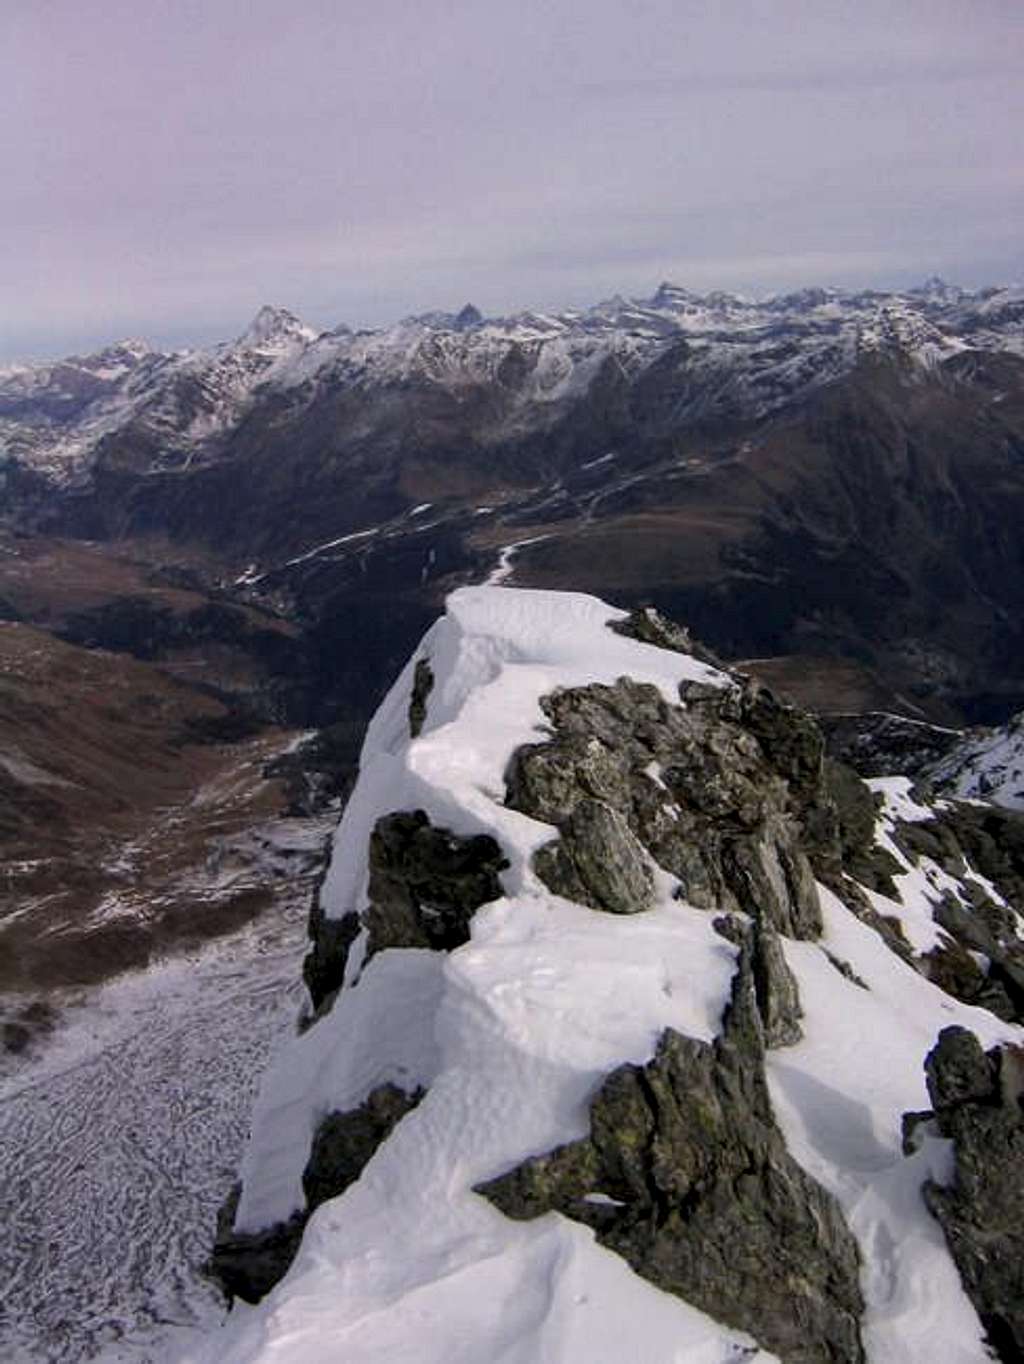 The north-east ridge.